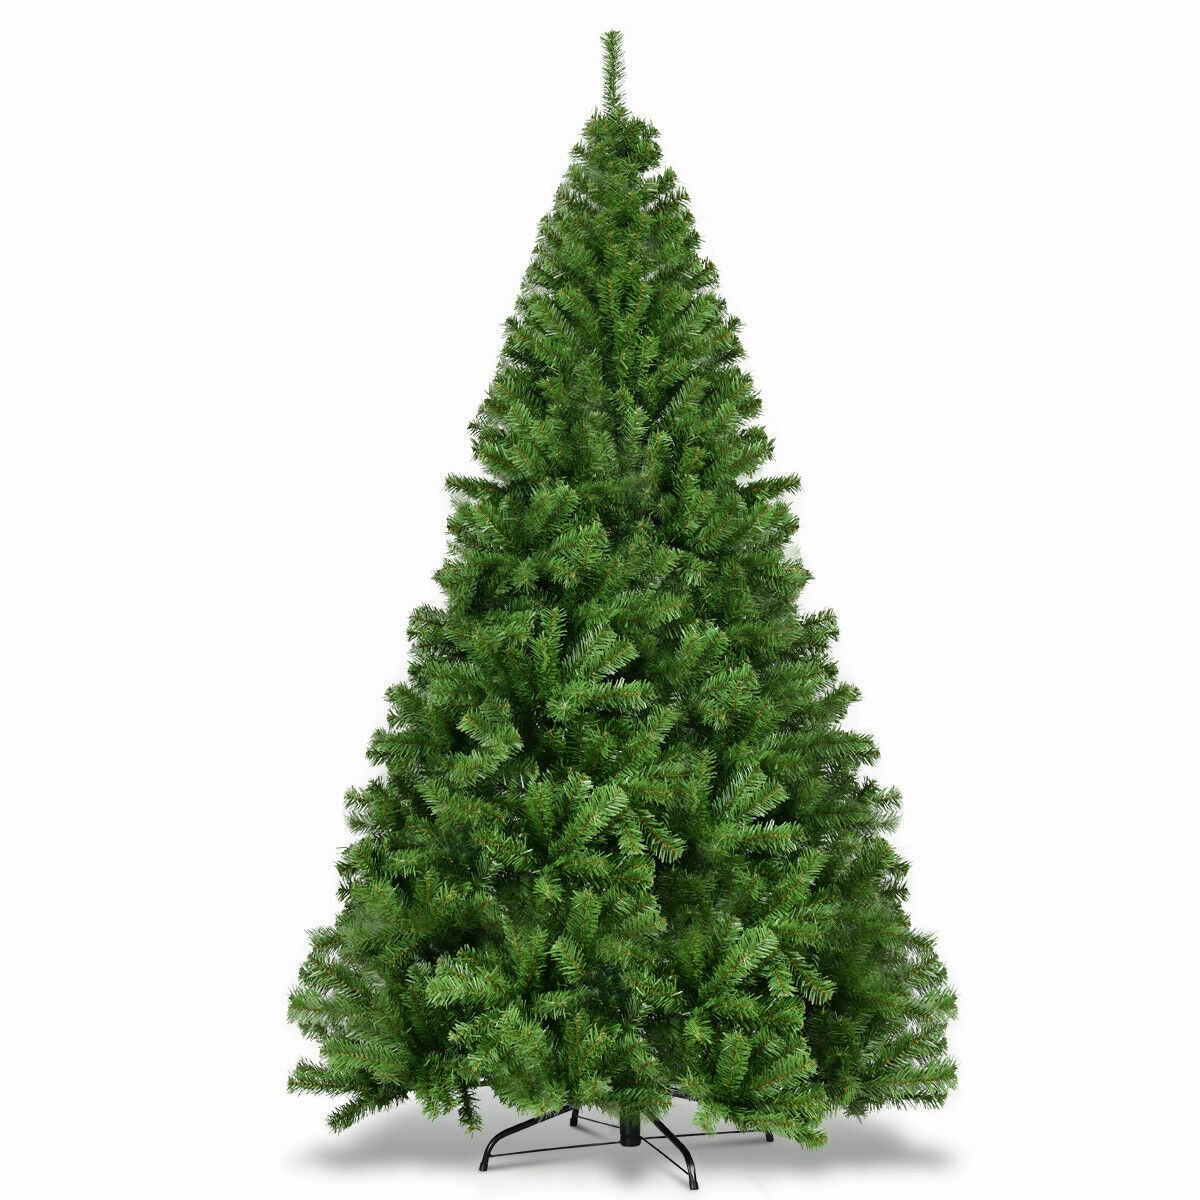 Luxury Xmas Santa Tree Artificial Christmas Tree Green&White 4ft,5ft,6ft,7ft,8ft 